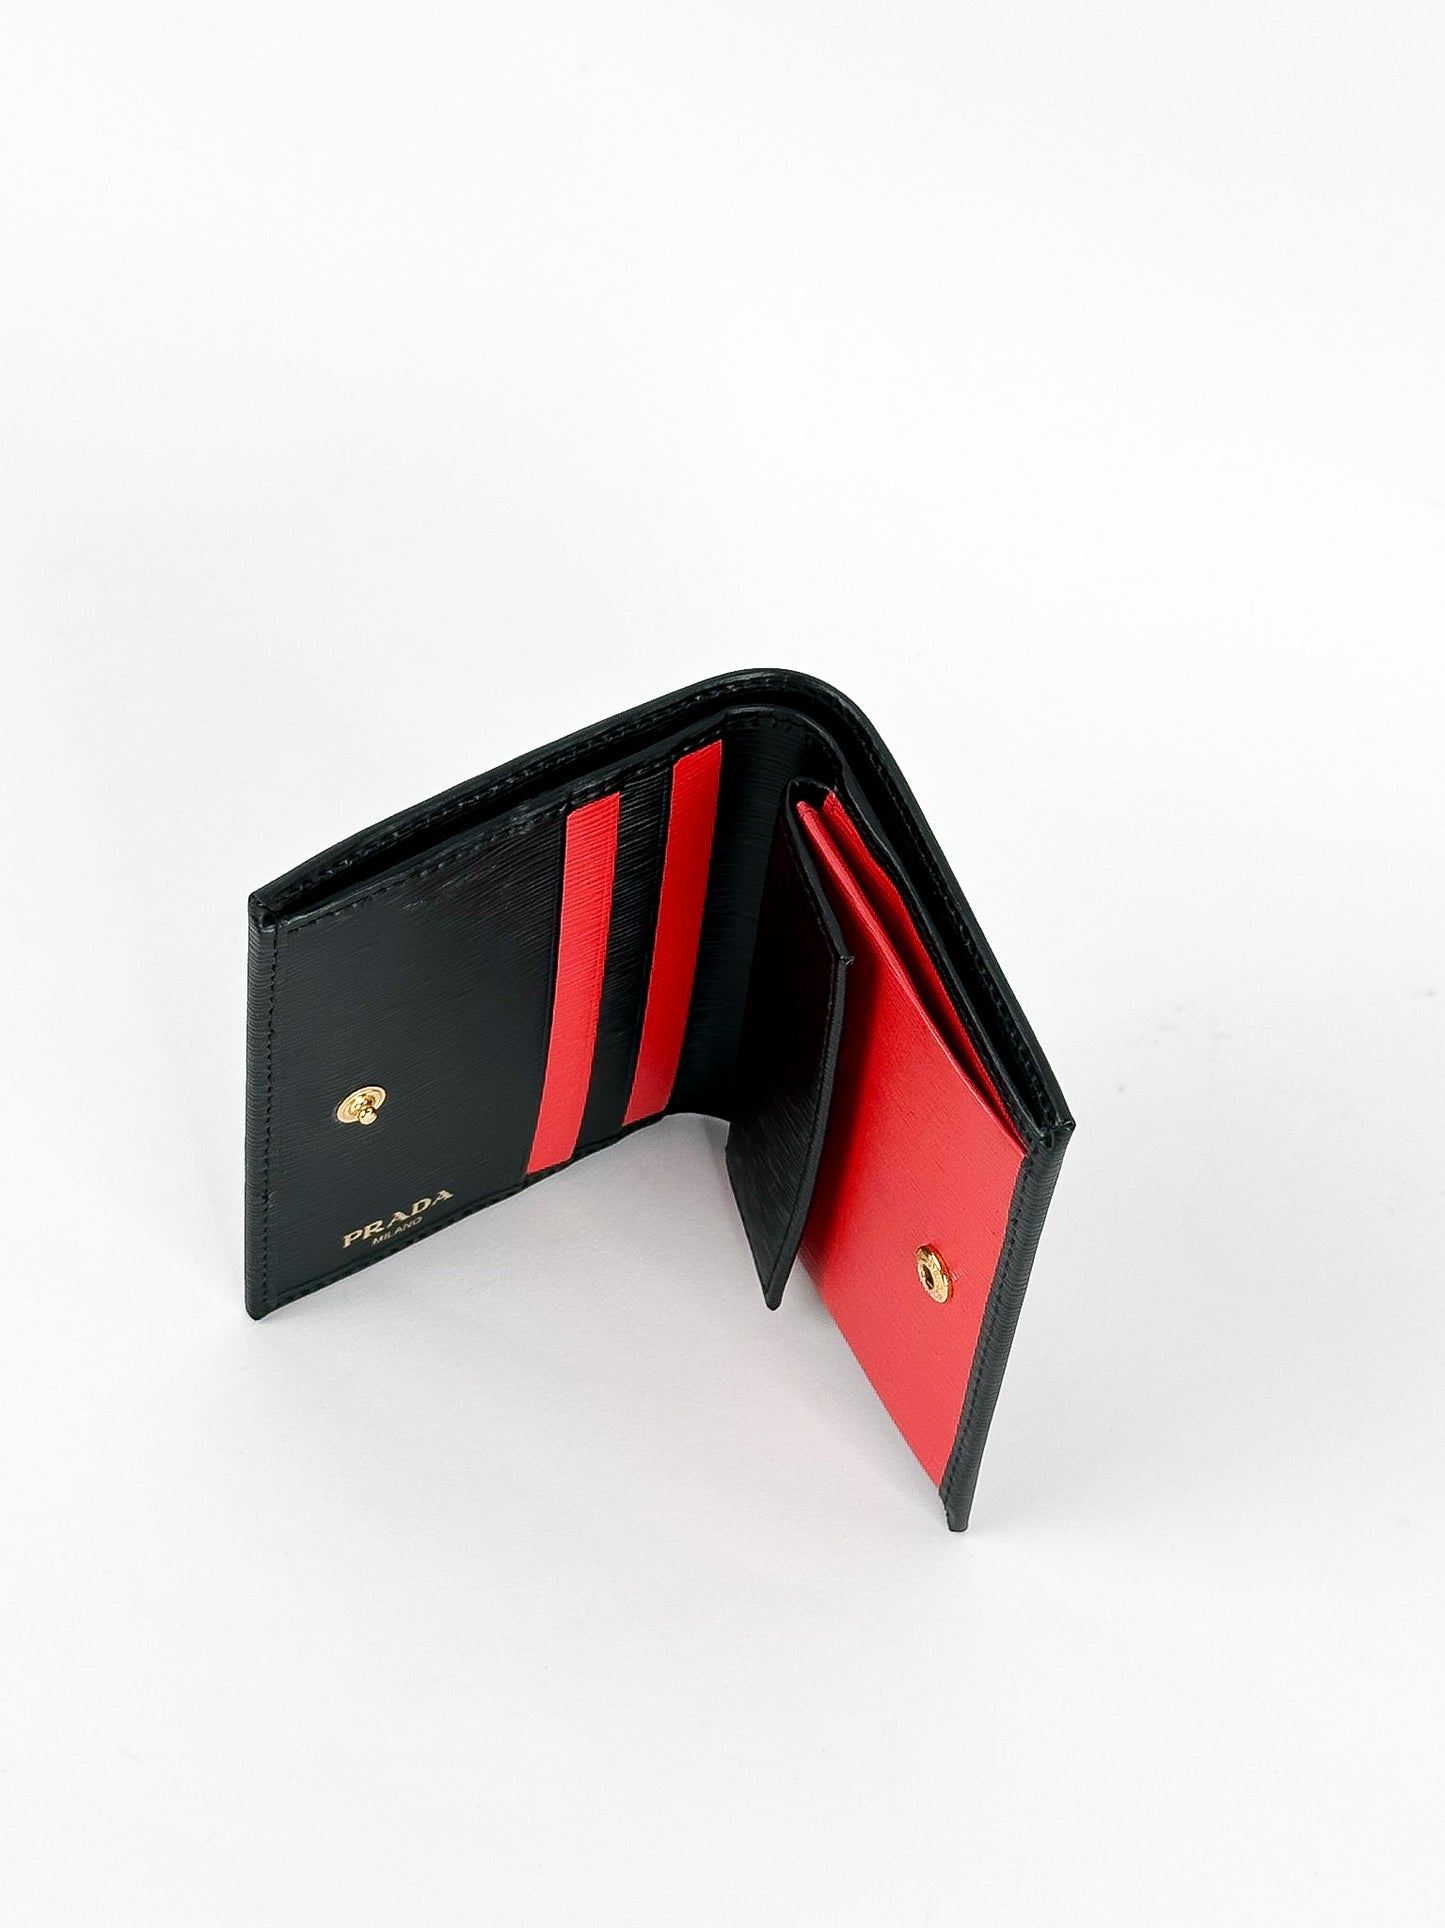 Prada Wallet Vitello Move Compact